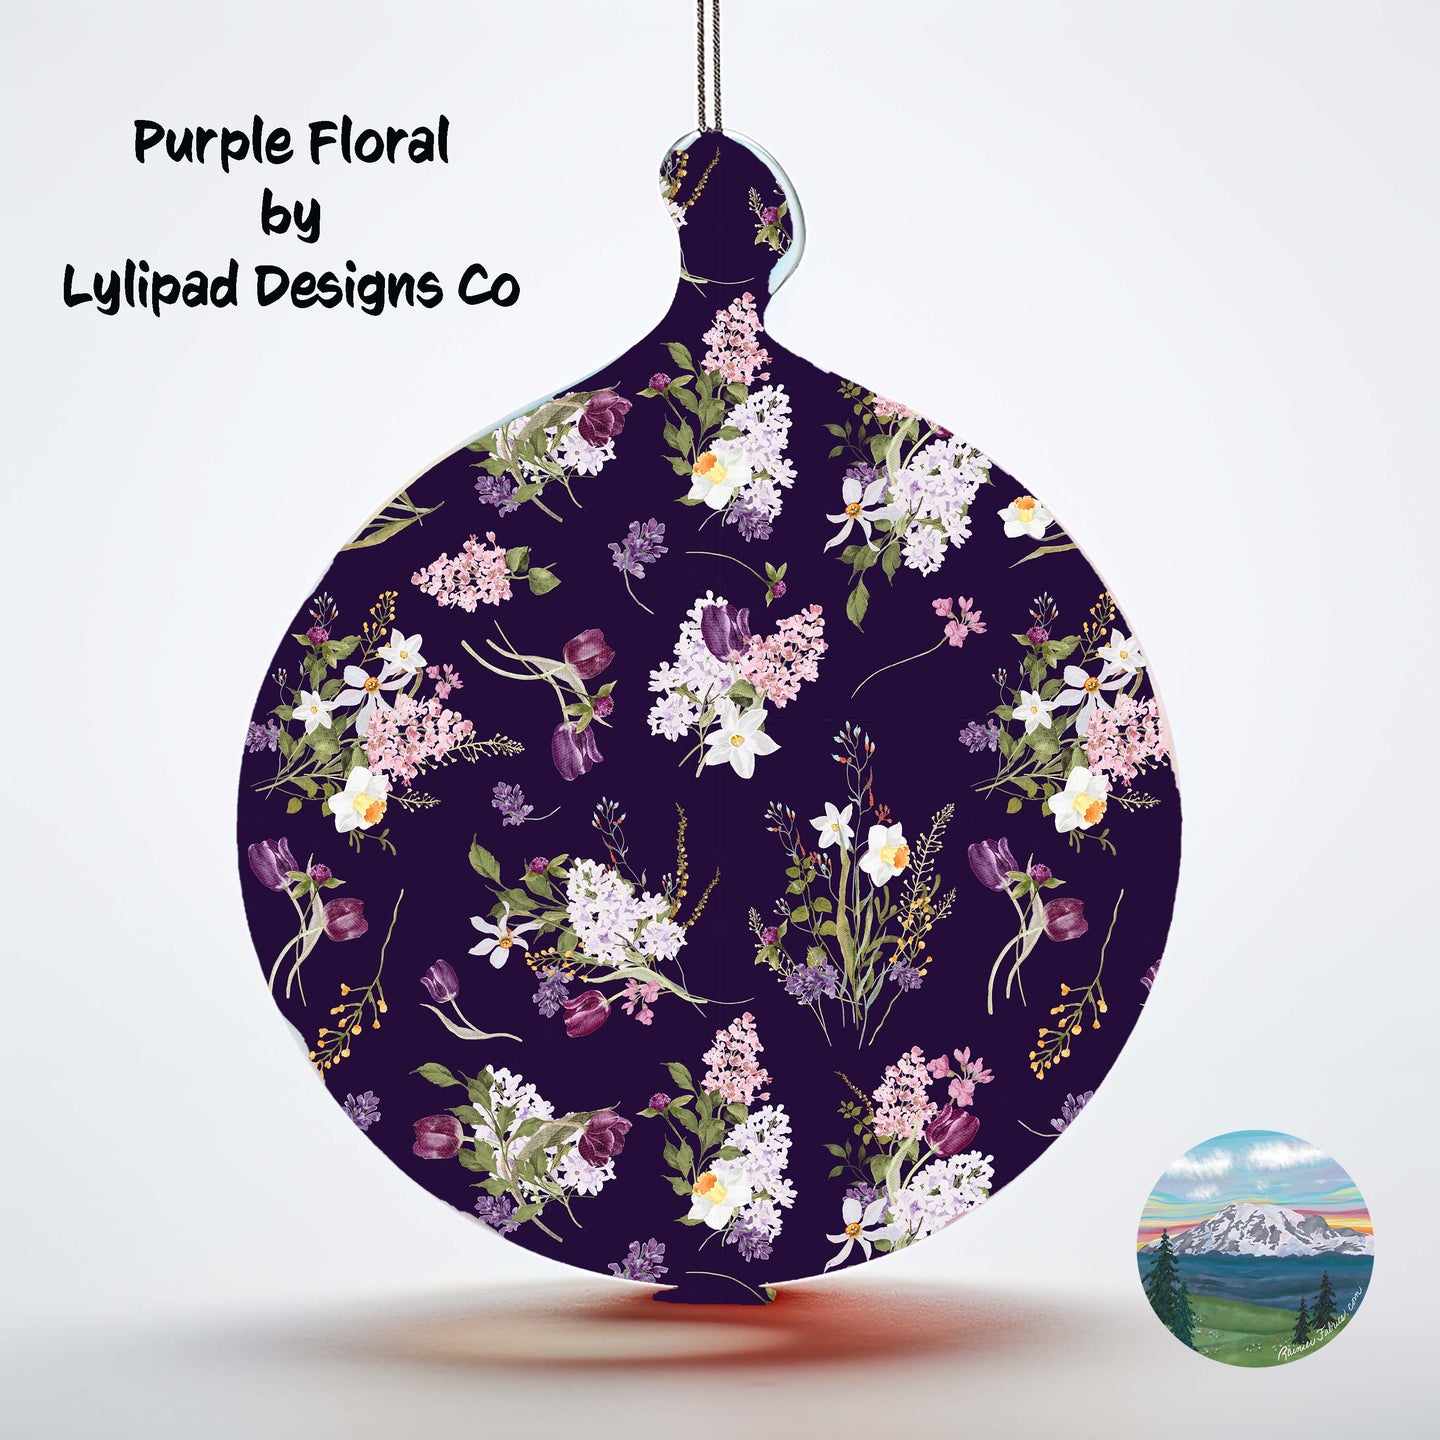 Purple Floral by Lylipad Designs Co